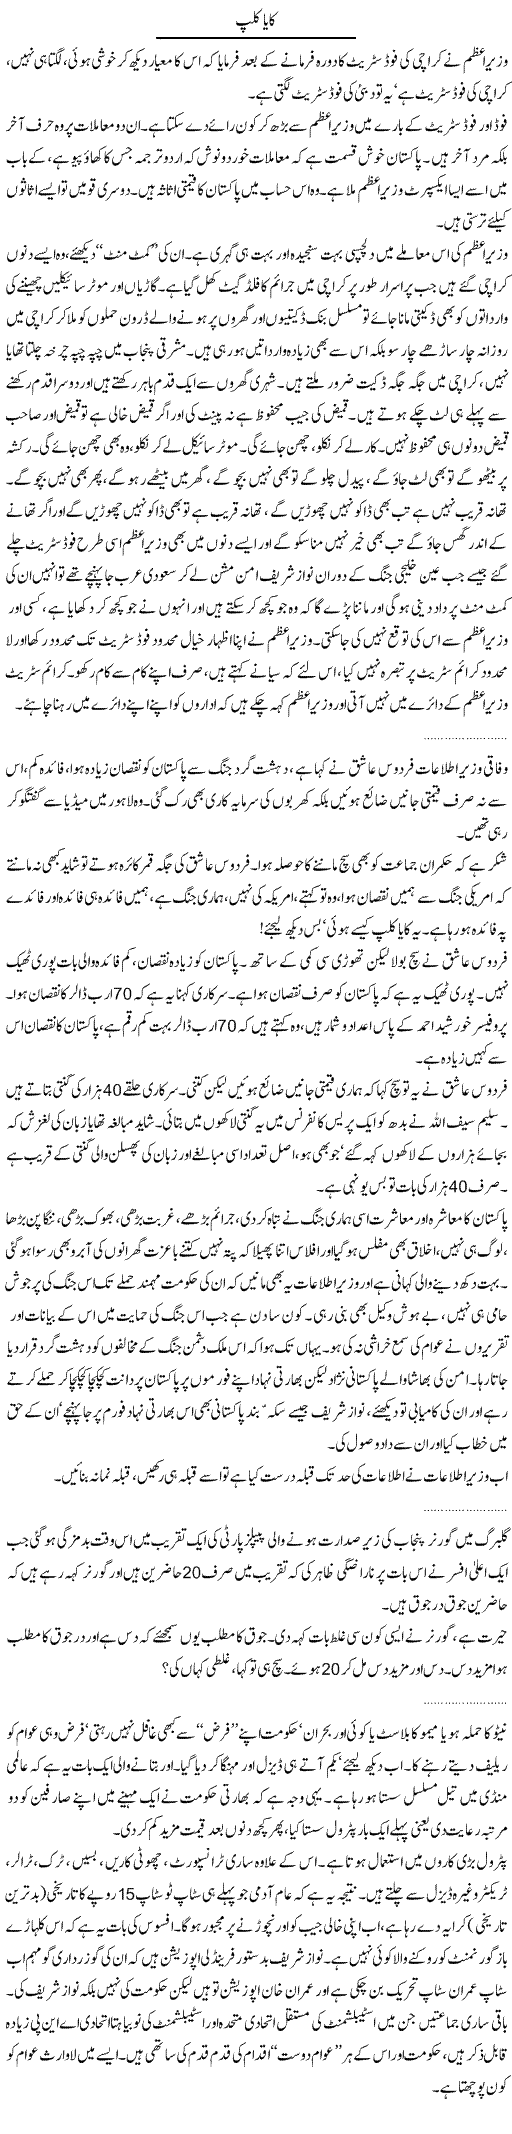 Pakistani Rulers Express Column Abdullah Tariq 2 December 2011